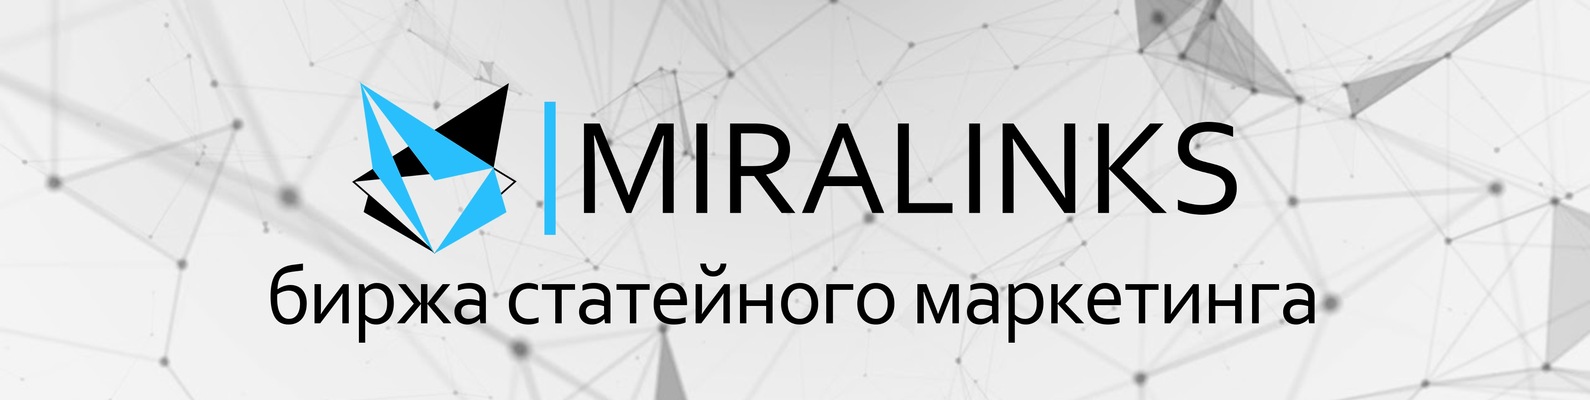 MiraLinks